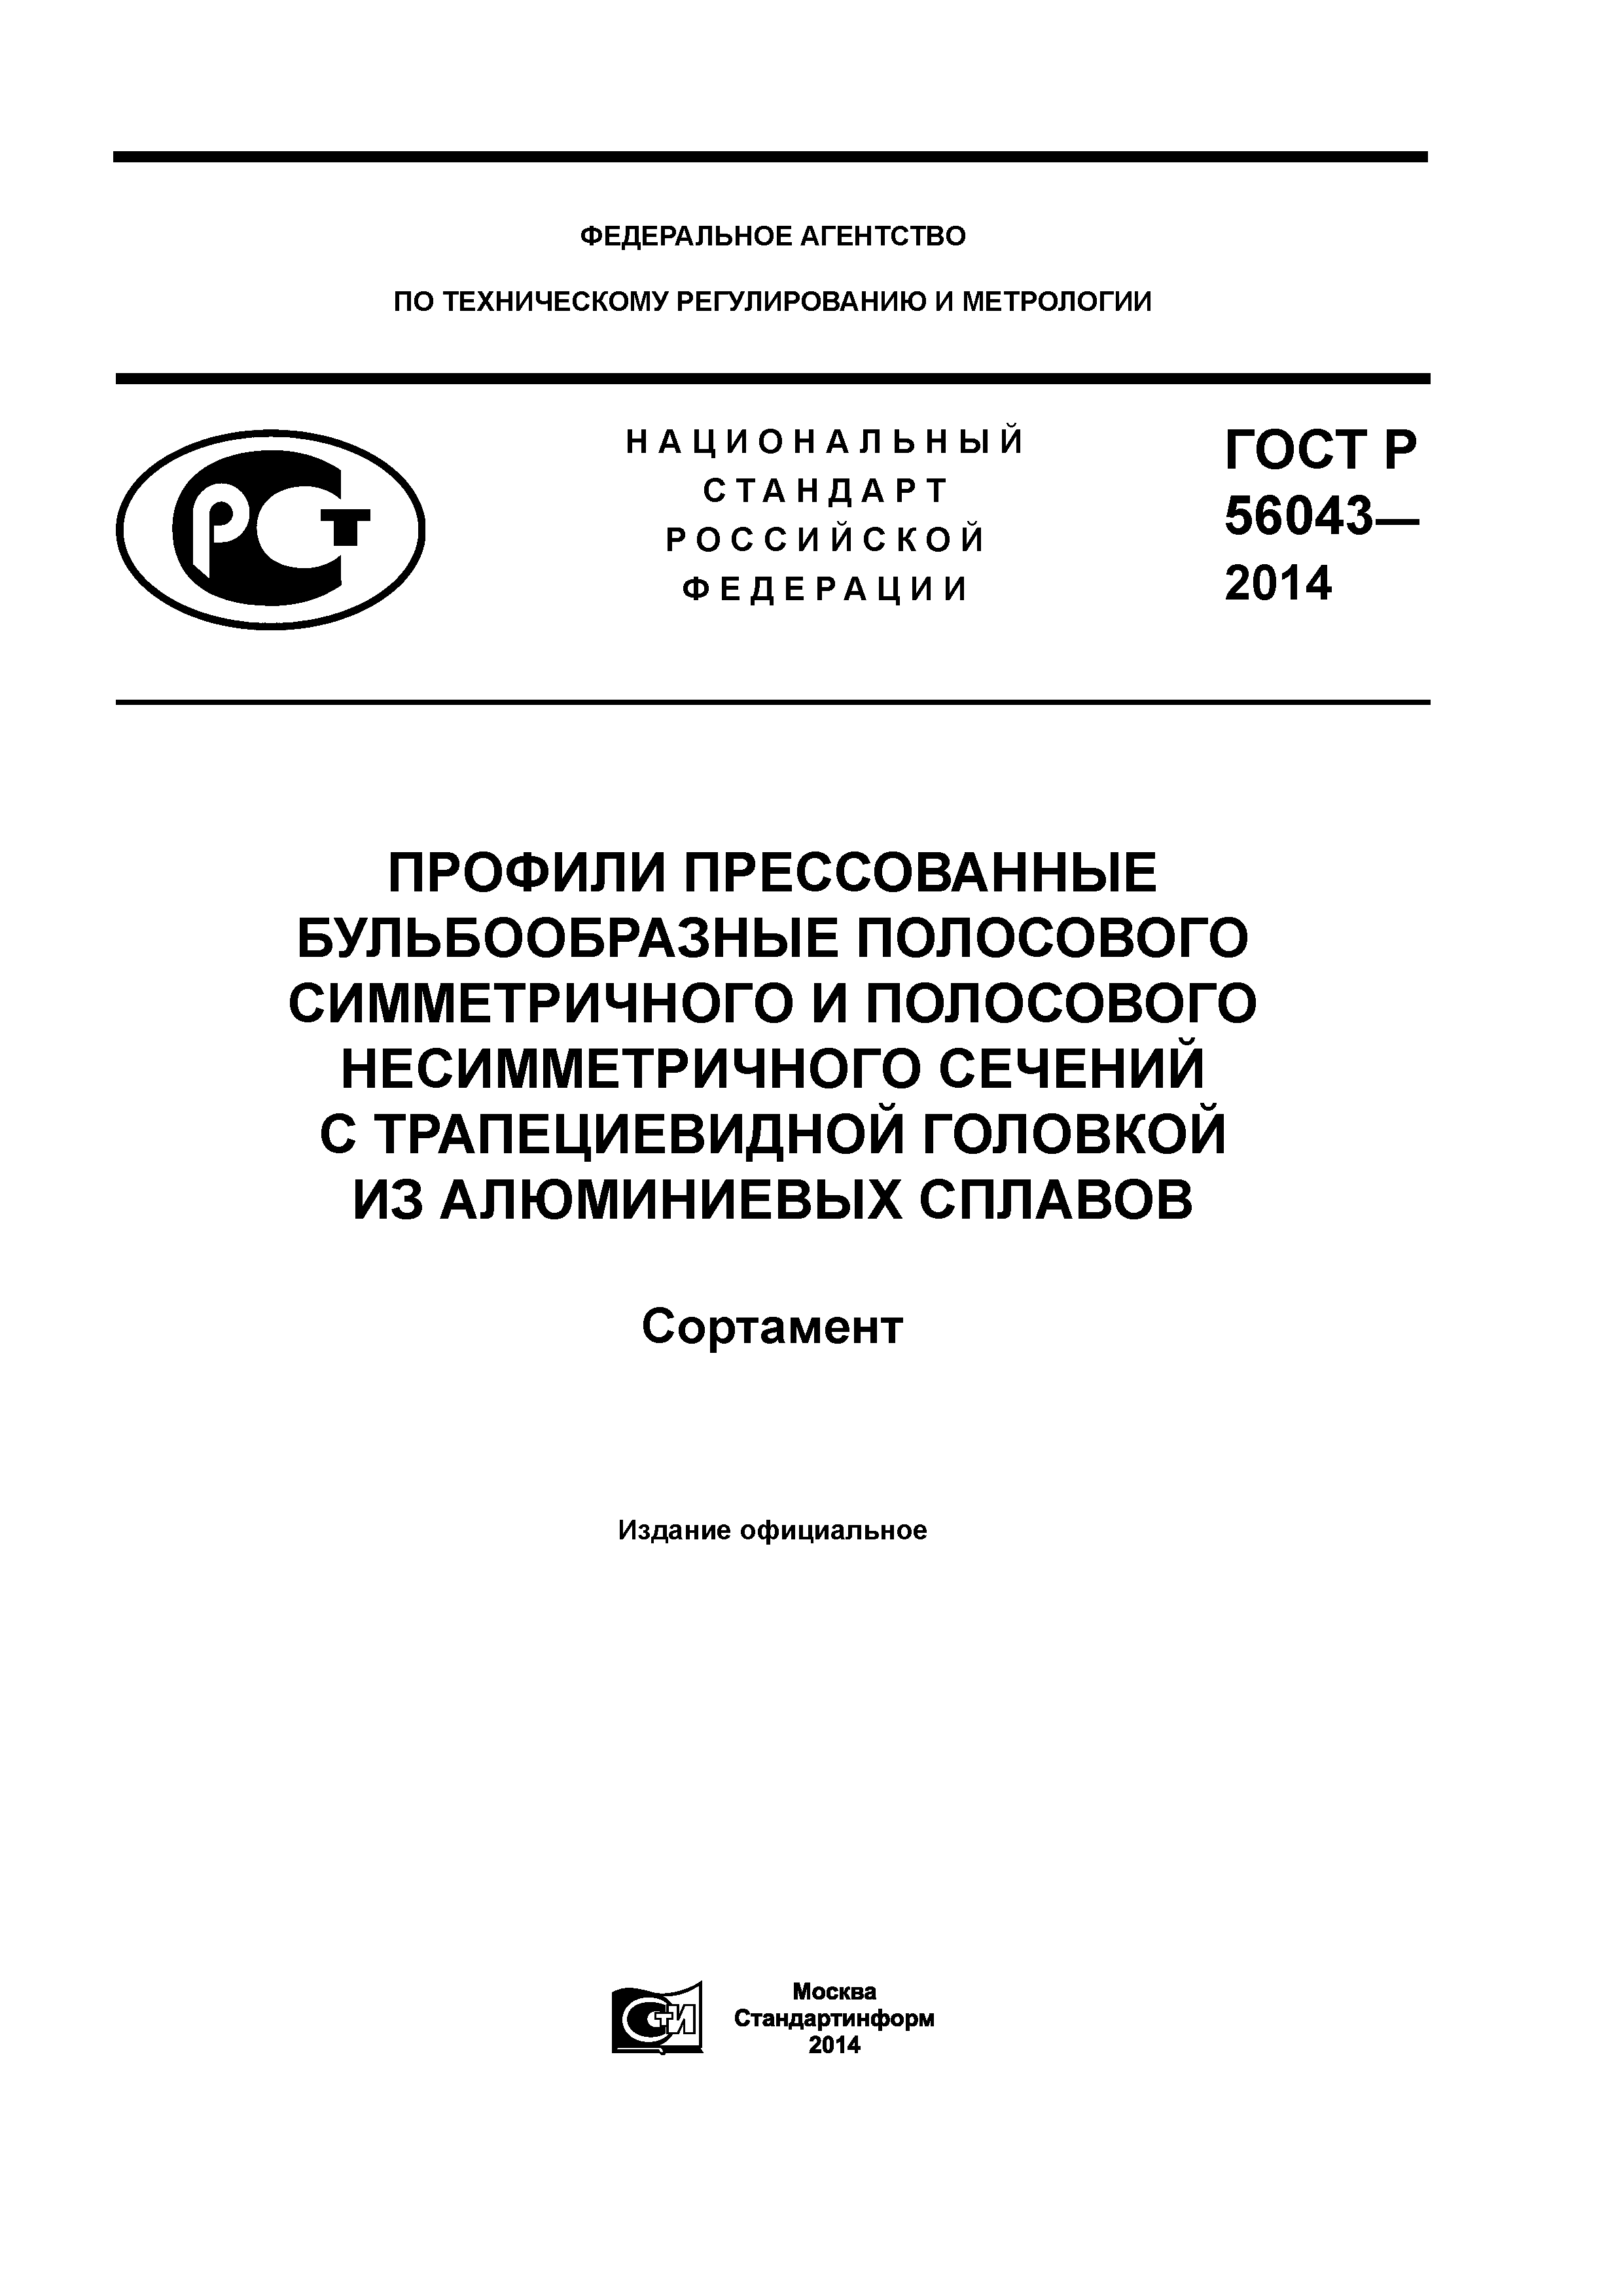 ГОСТ Р 56043-2014